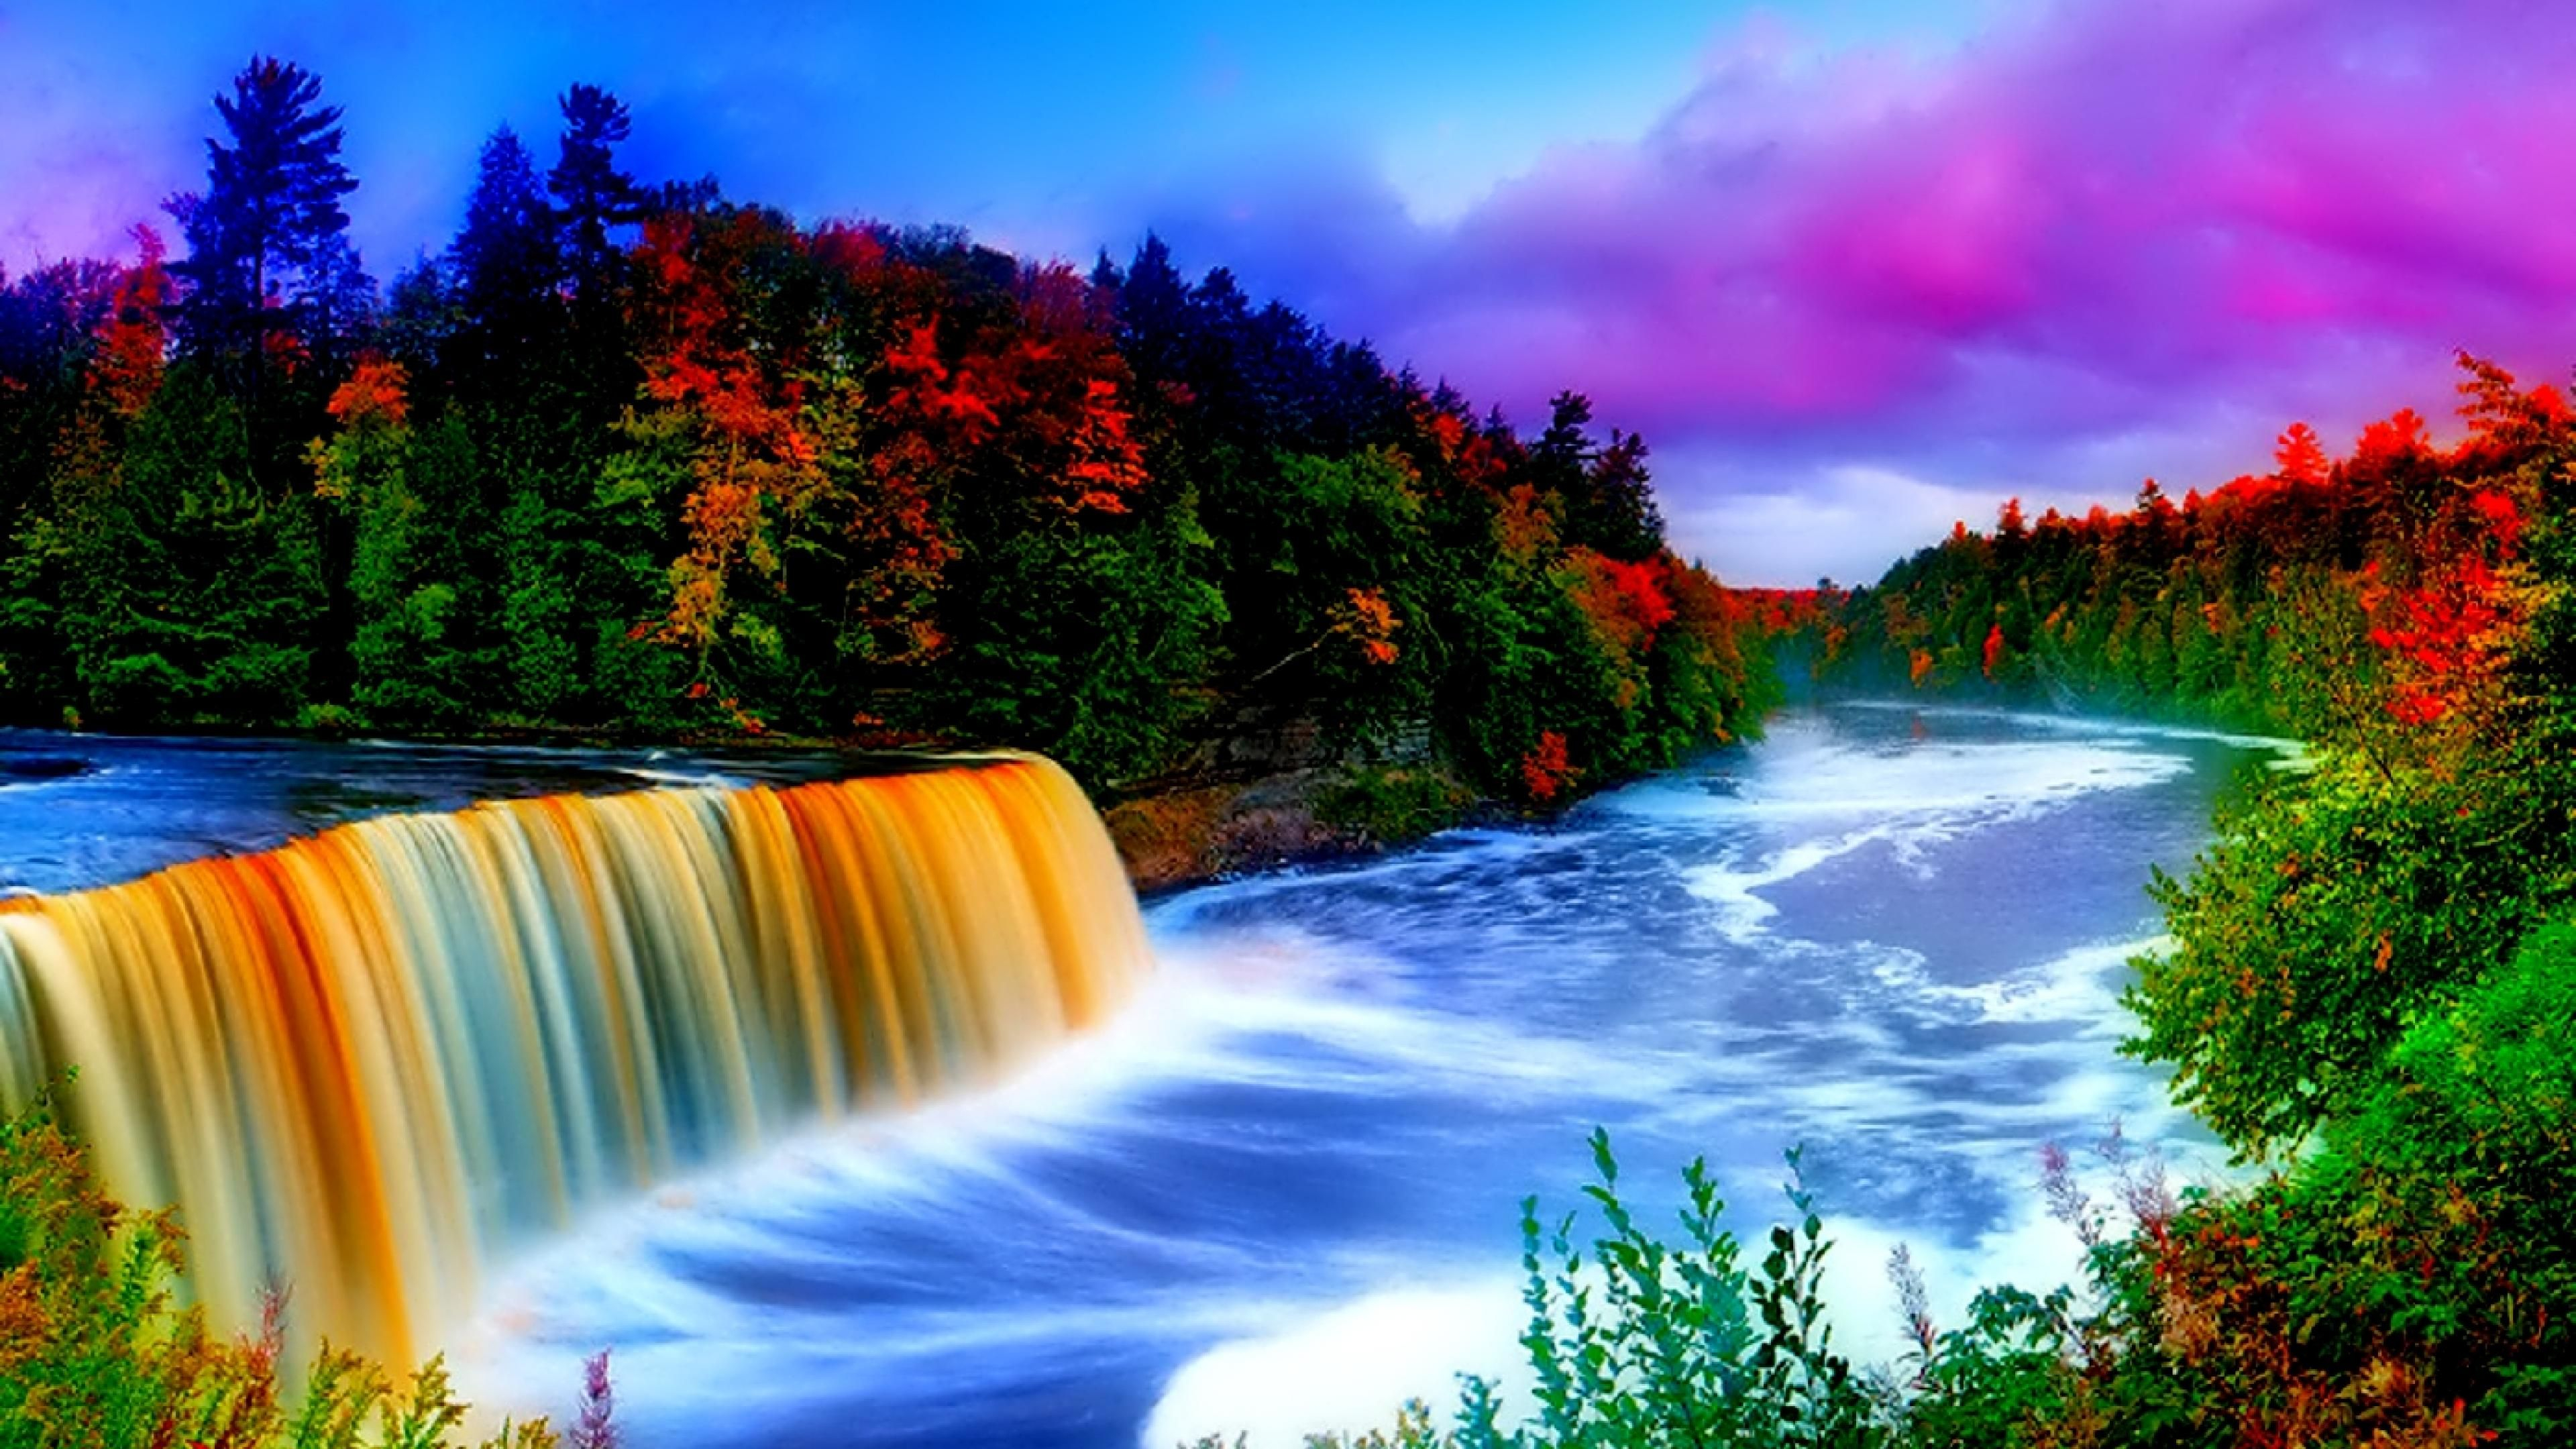 3840x2160 Nature Waterfall Hd Wallpapers 6 : Hd Wallpapers | Waterfall wallpaper, Rainbow waterfall, Beautiful nature scenes